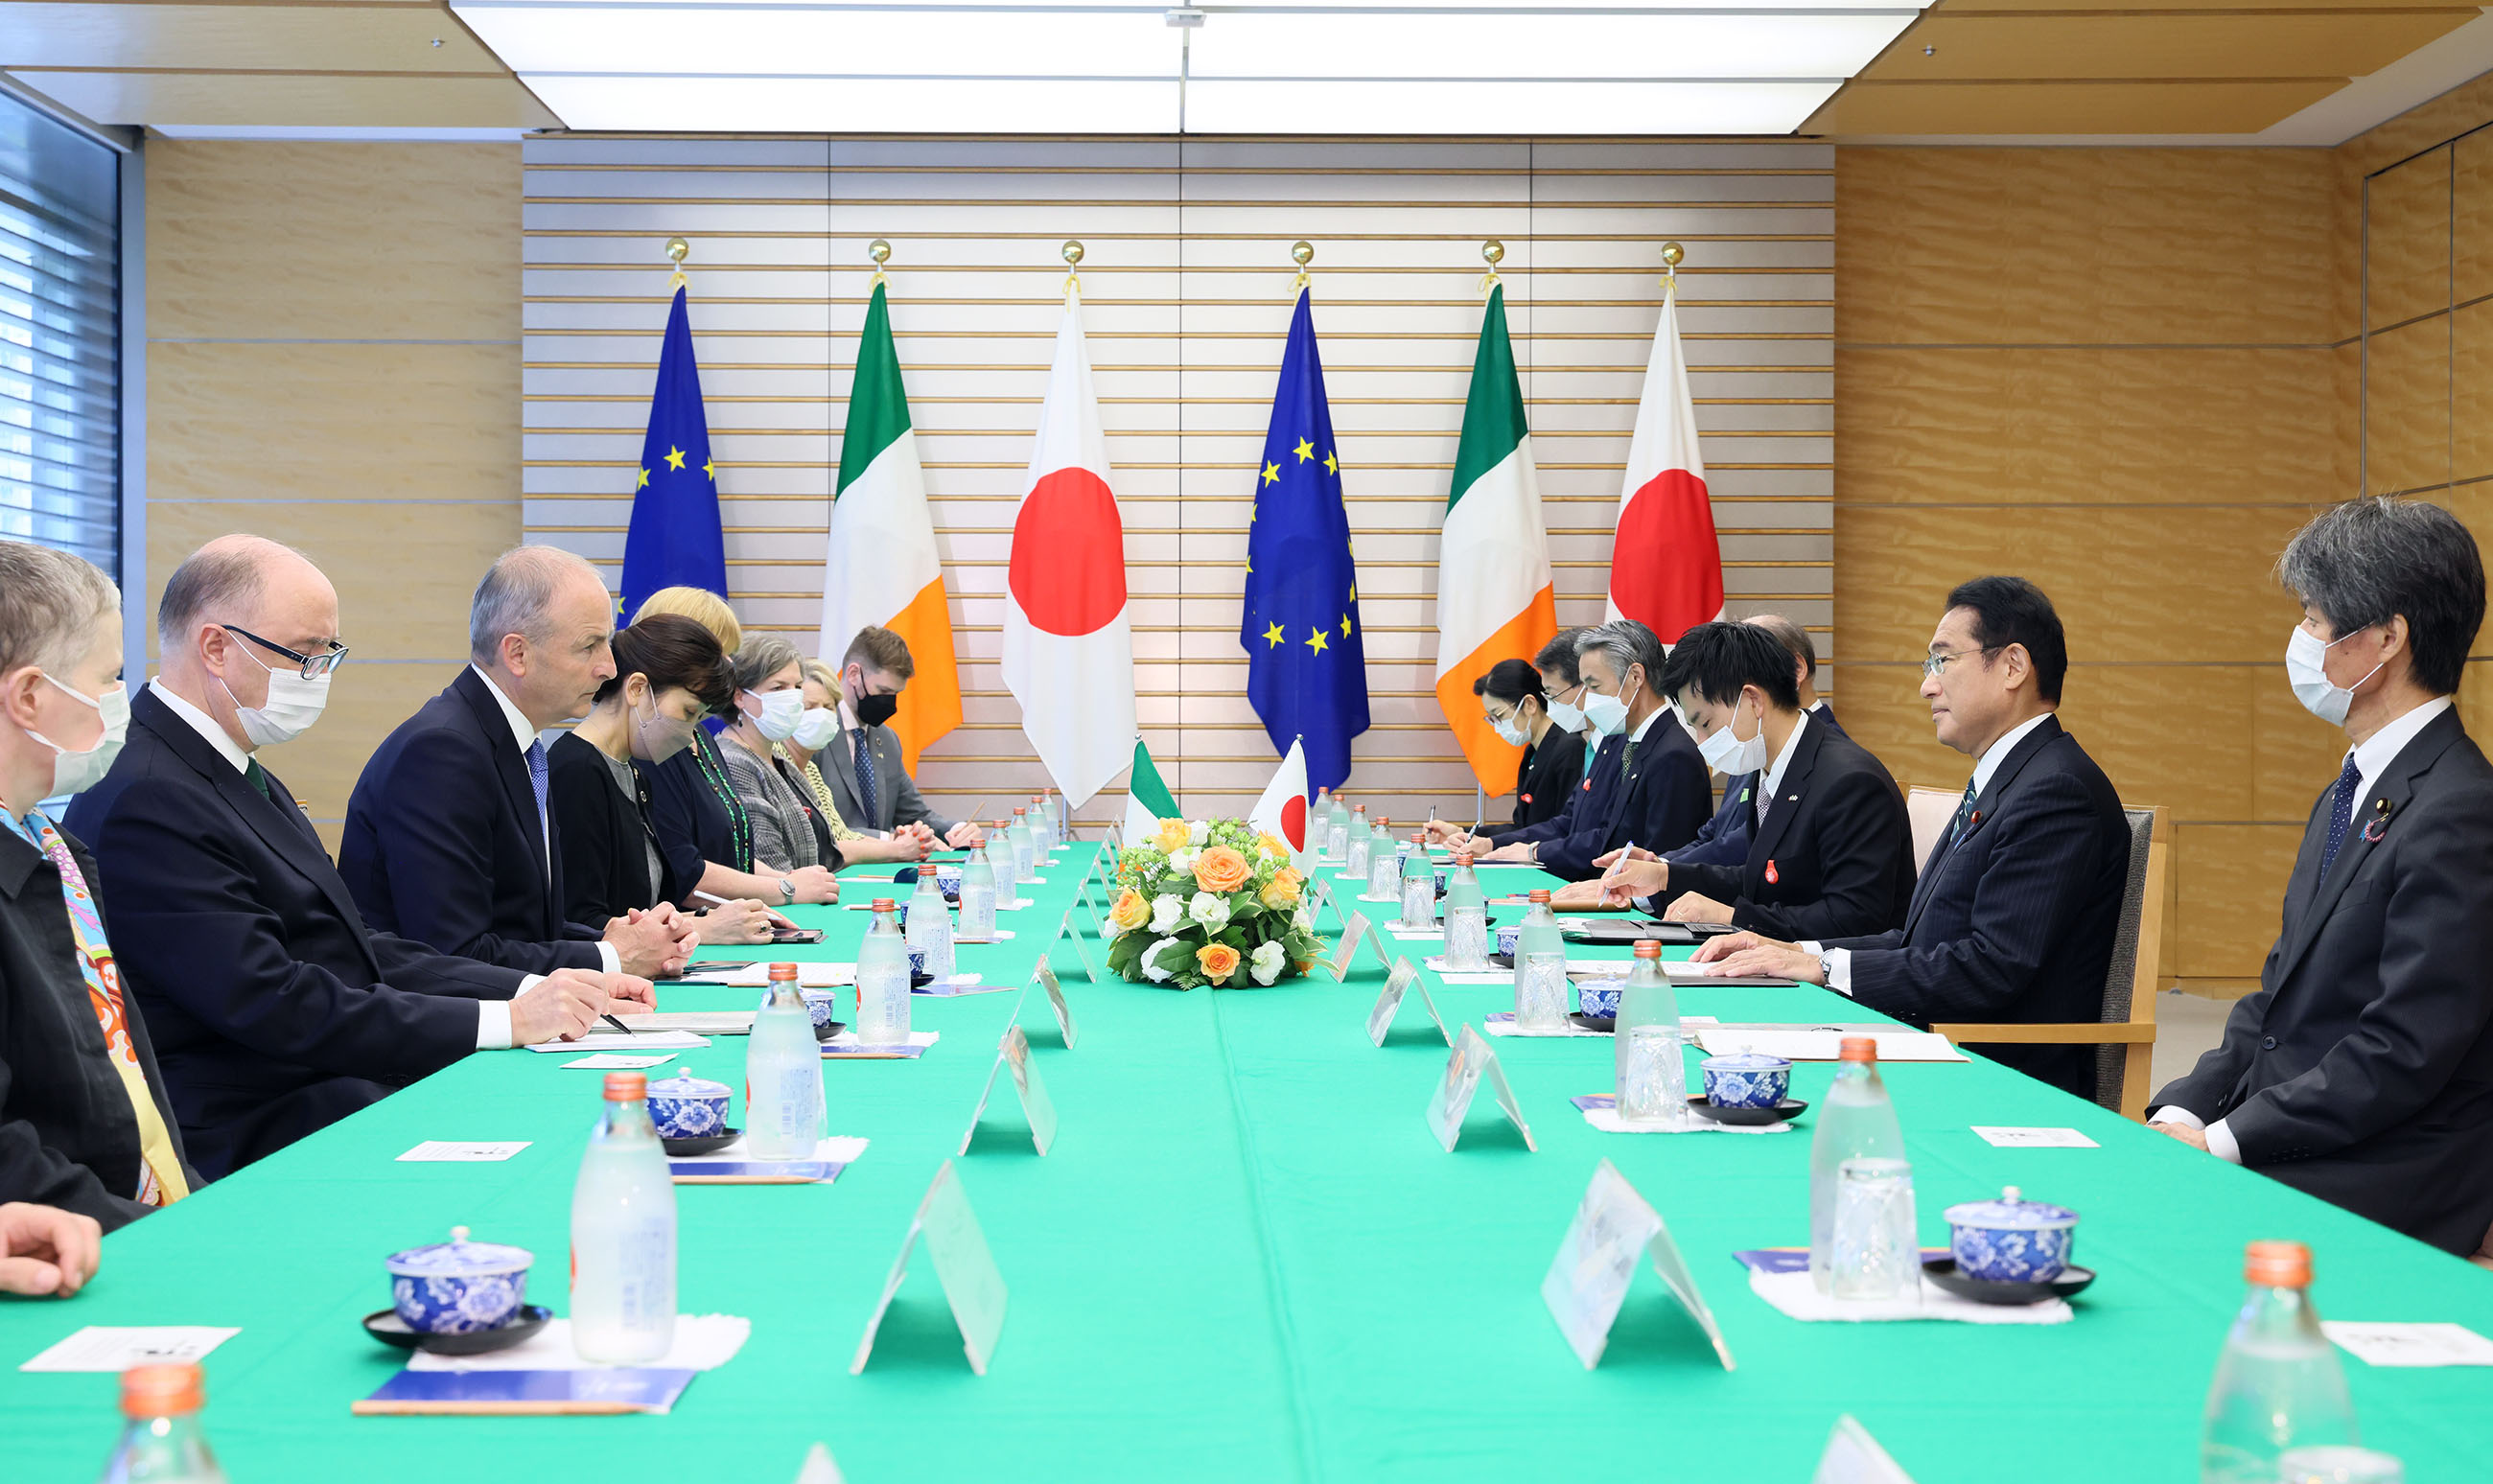 Photograph of the Japan-Ireland Summit Meeting (1)